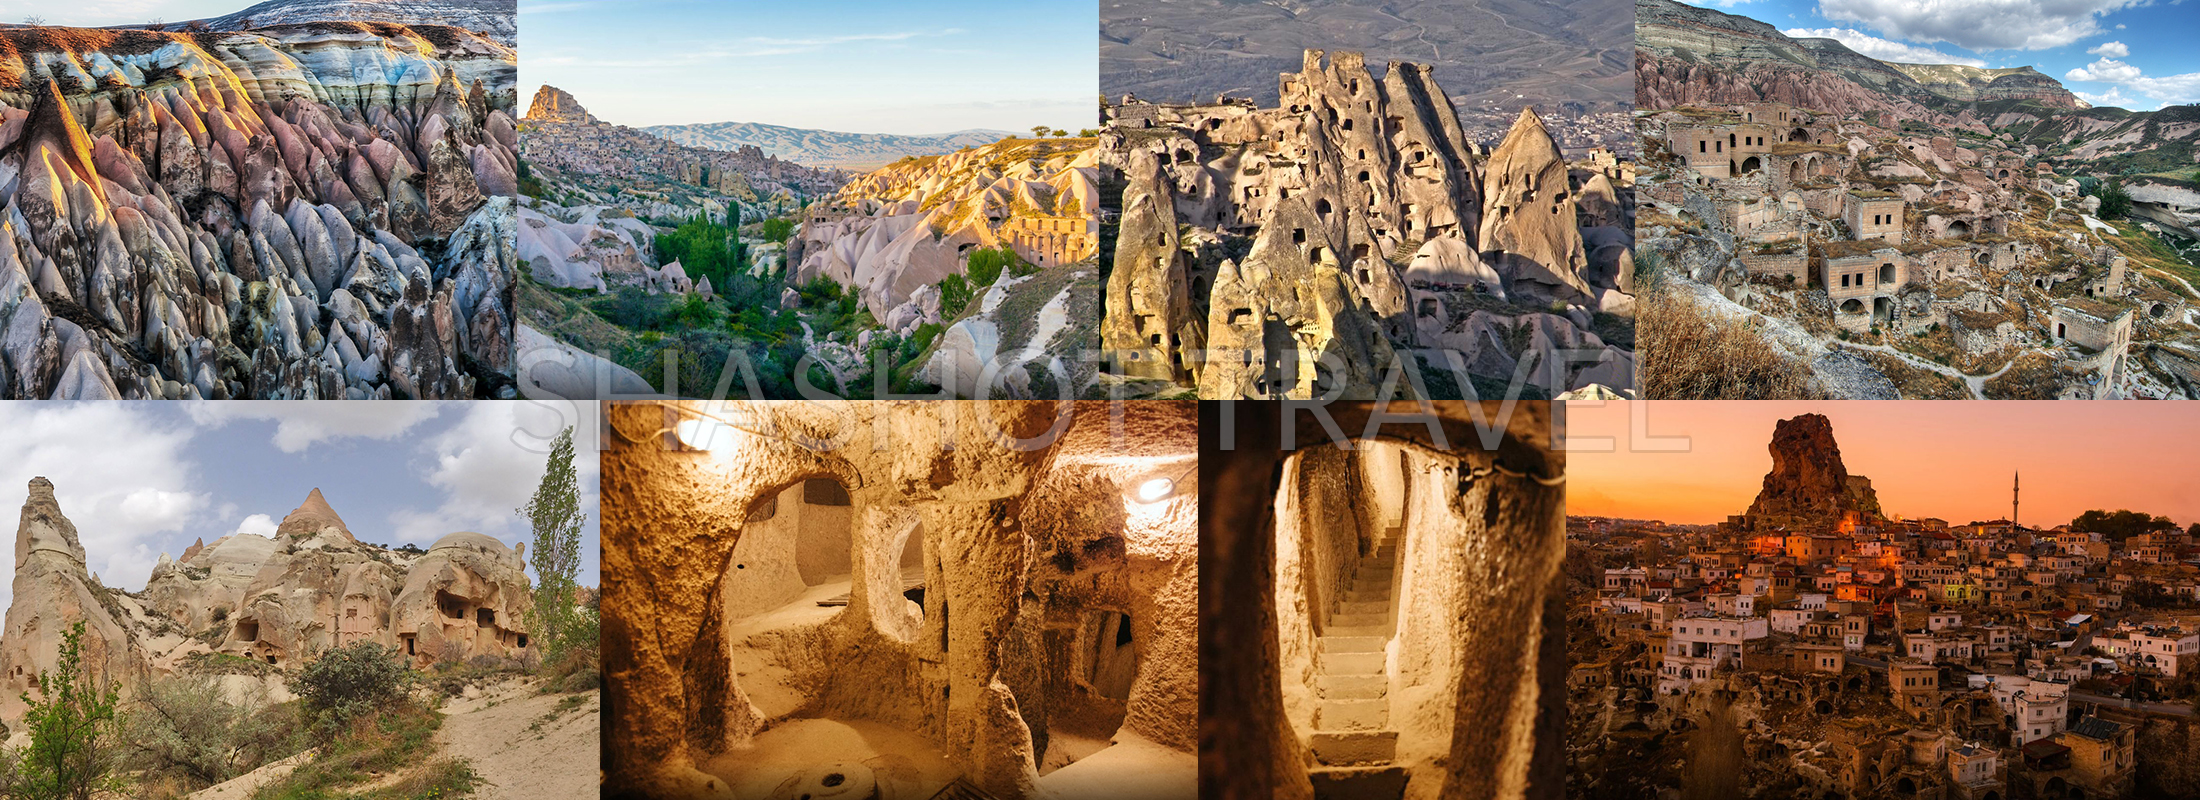 cappadocia-turkey-shashot-travel-walking-hiking-tour-turkiye